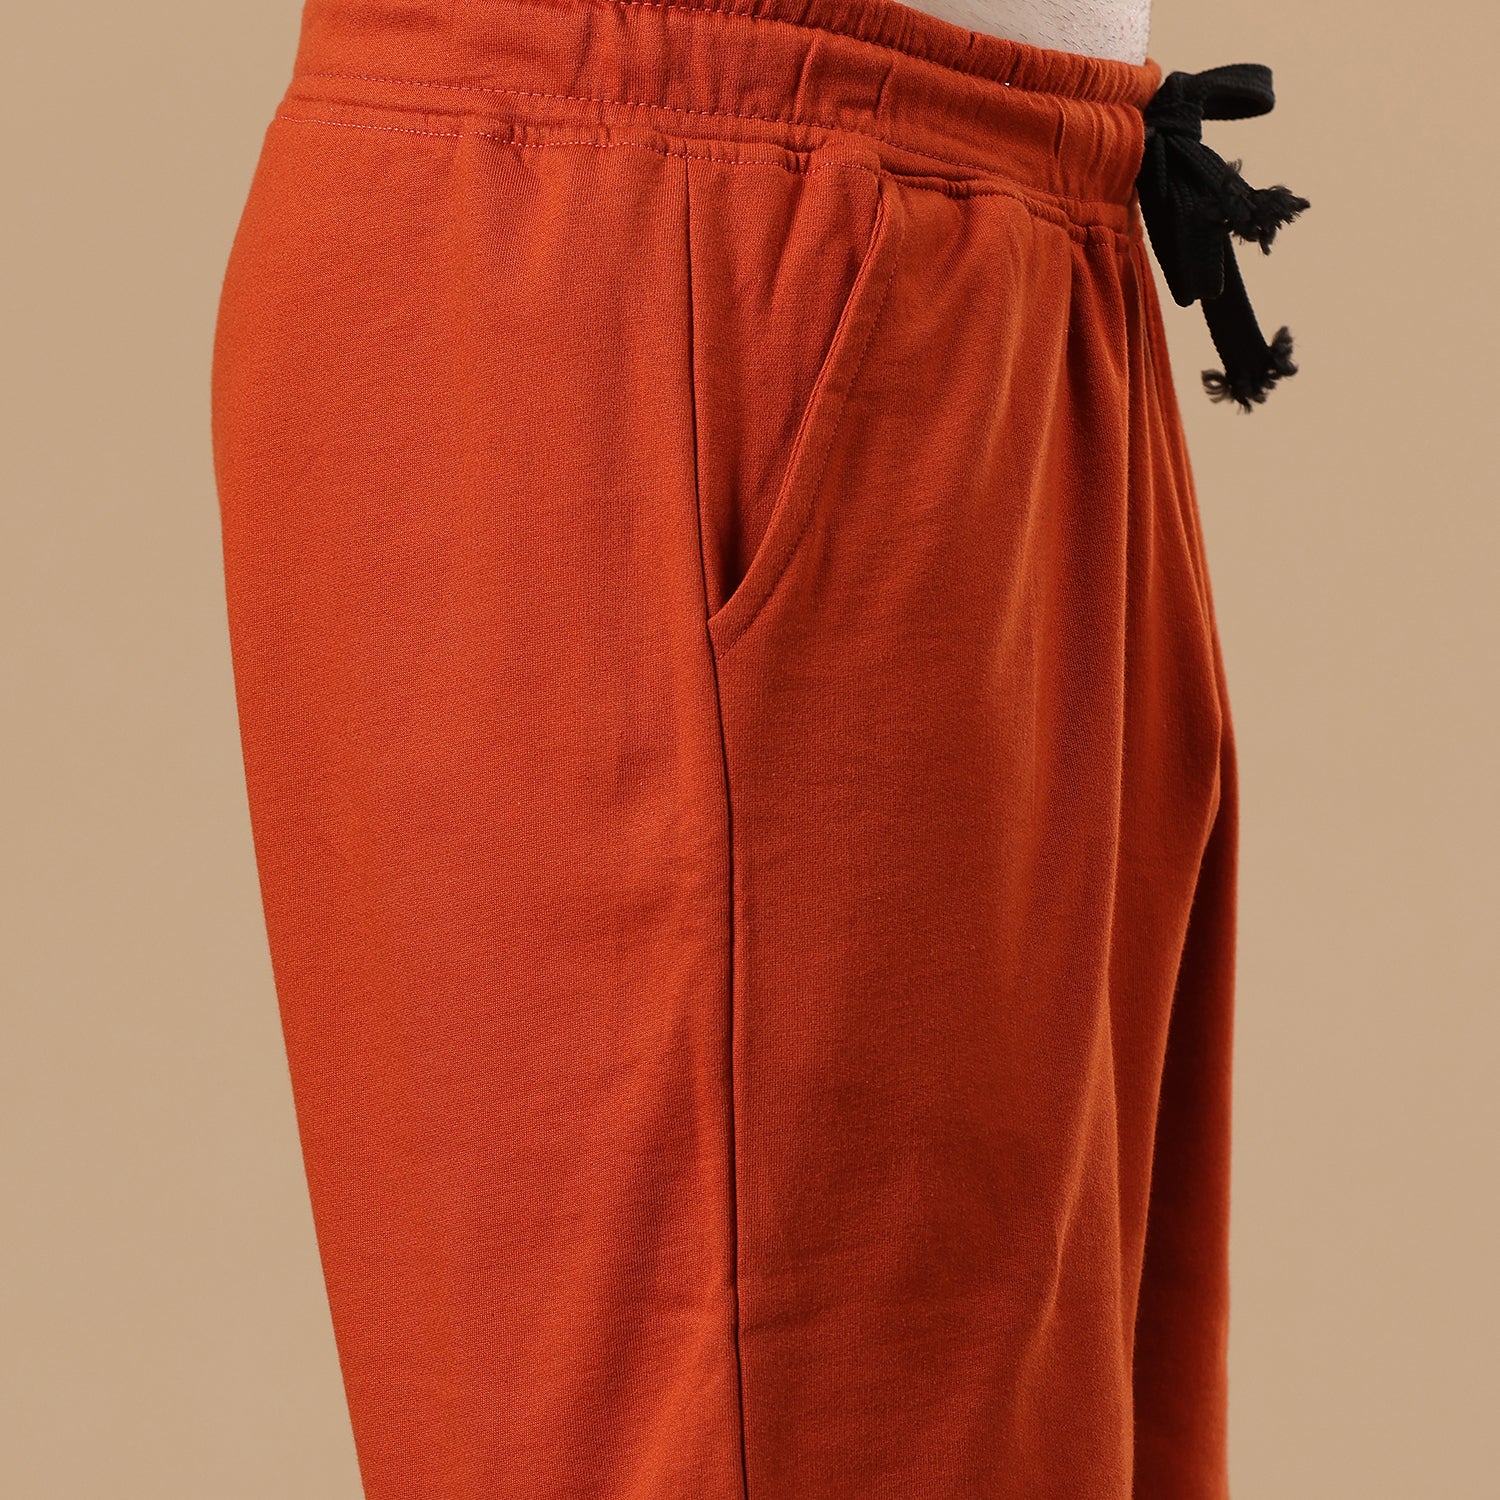 Men's Orange Casual Shorts